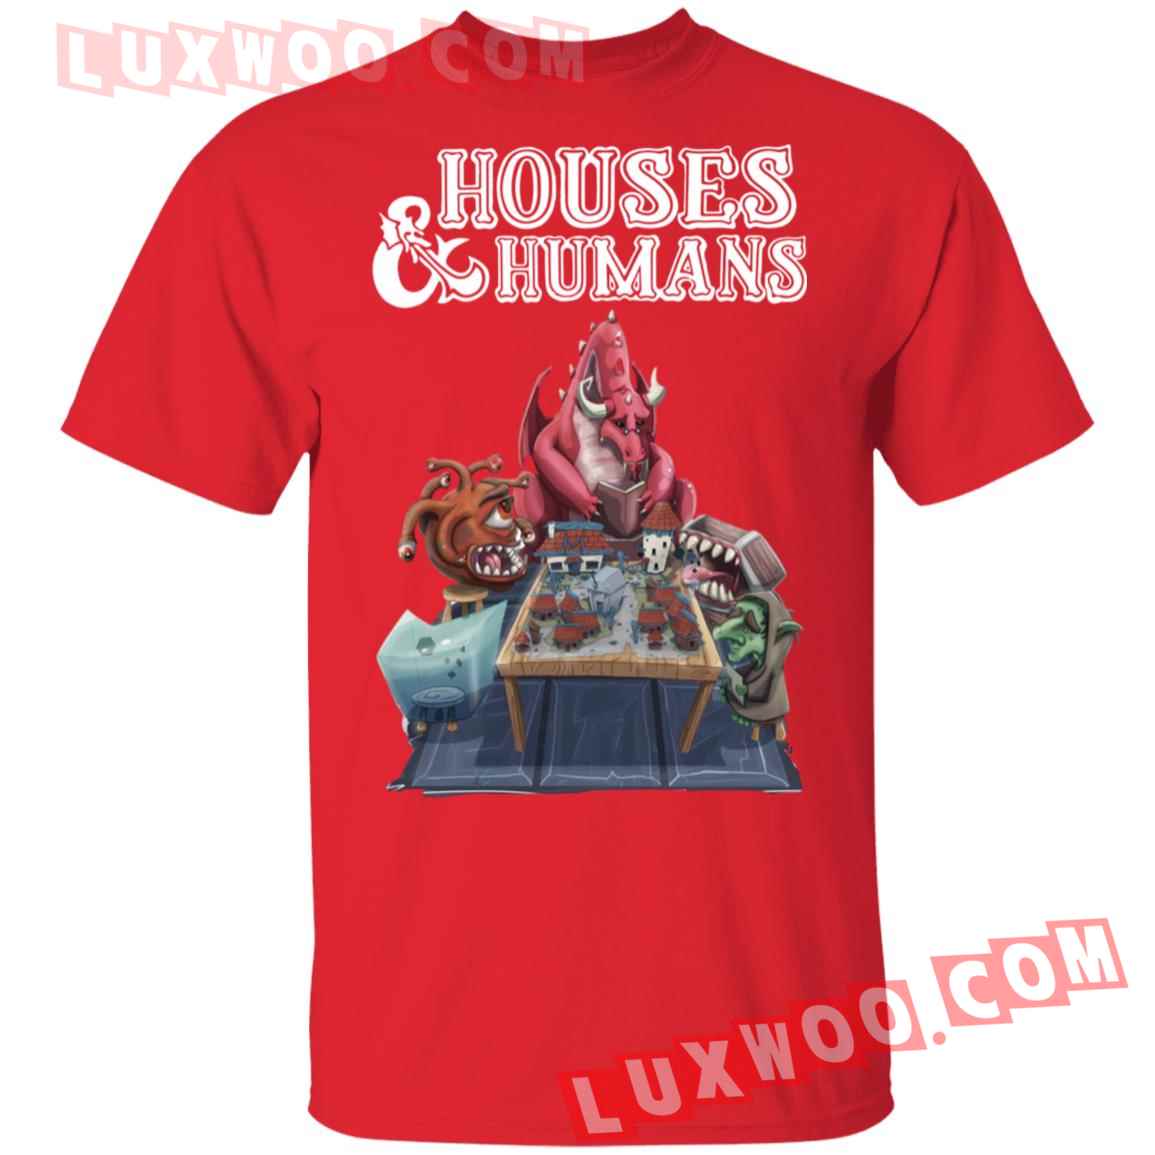 Houses And Humans Shirt